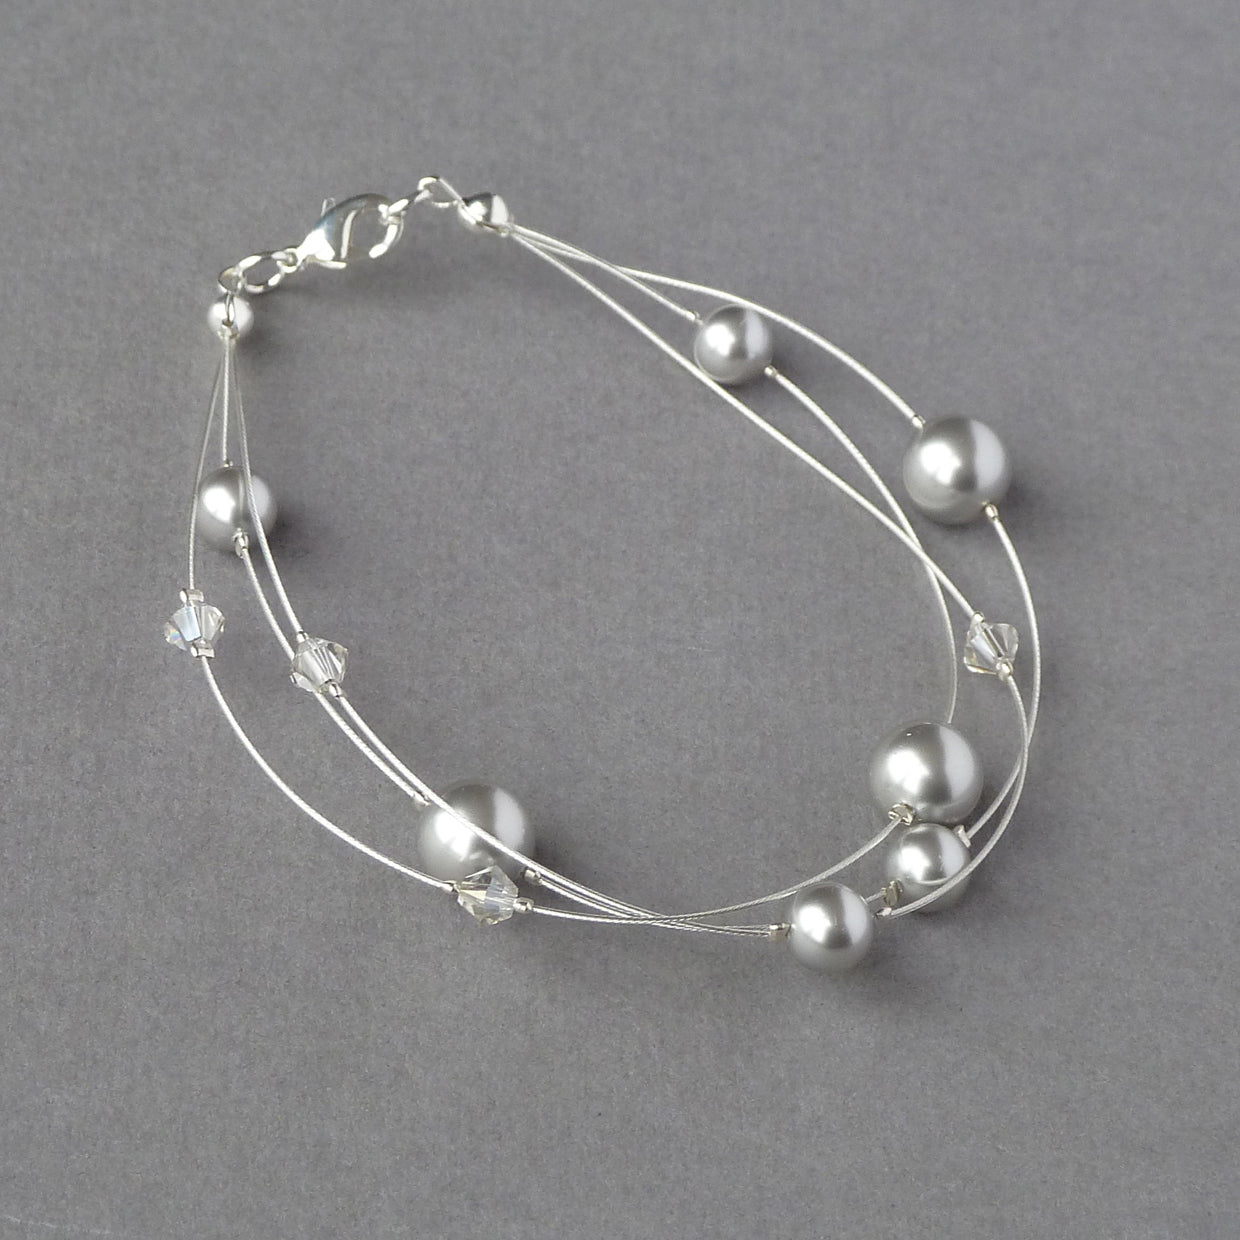 Light grey floating pearl bracelet